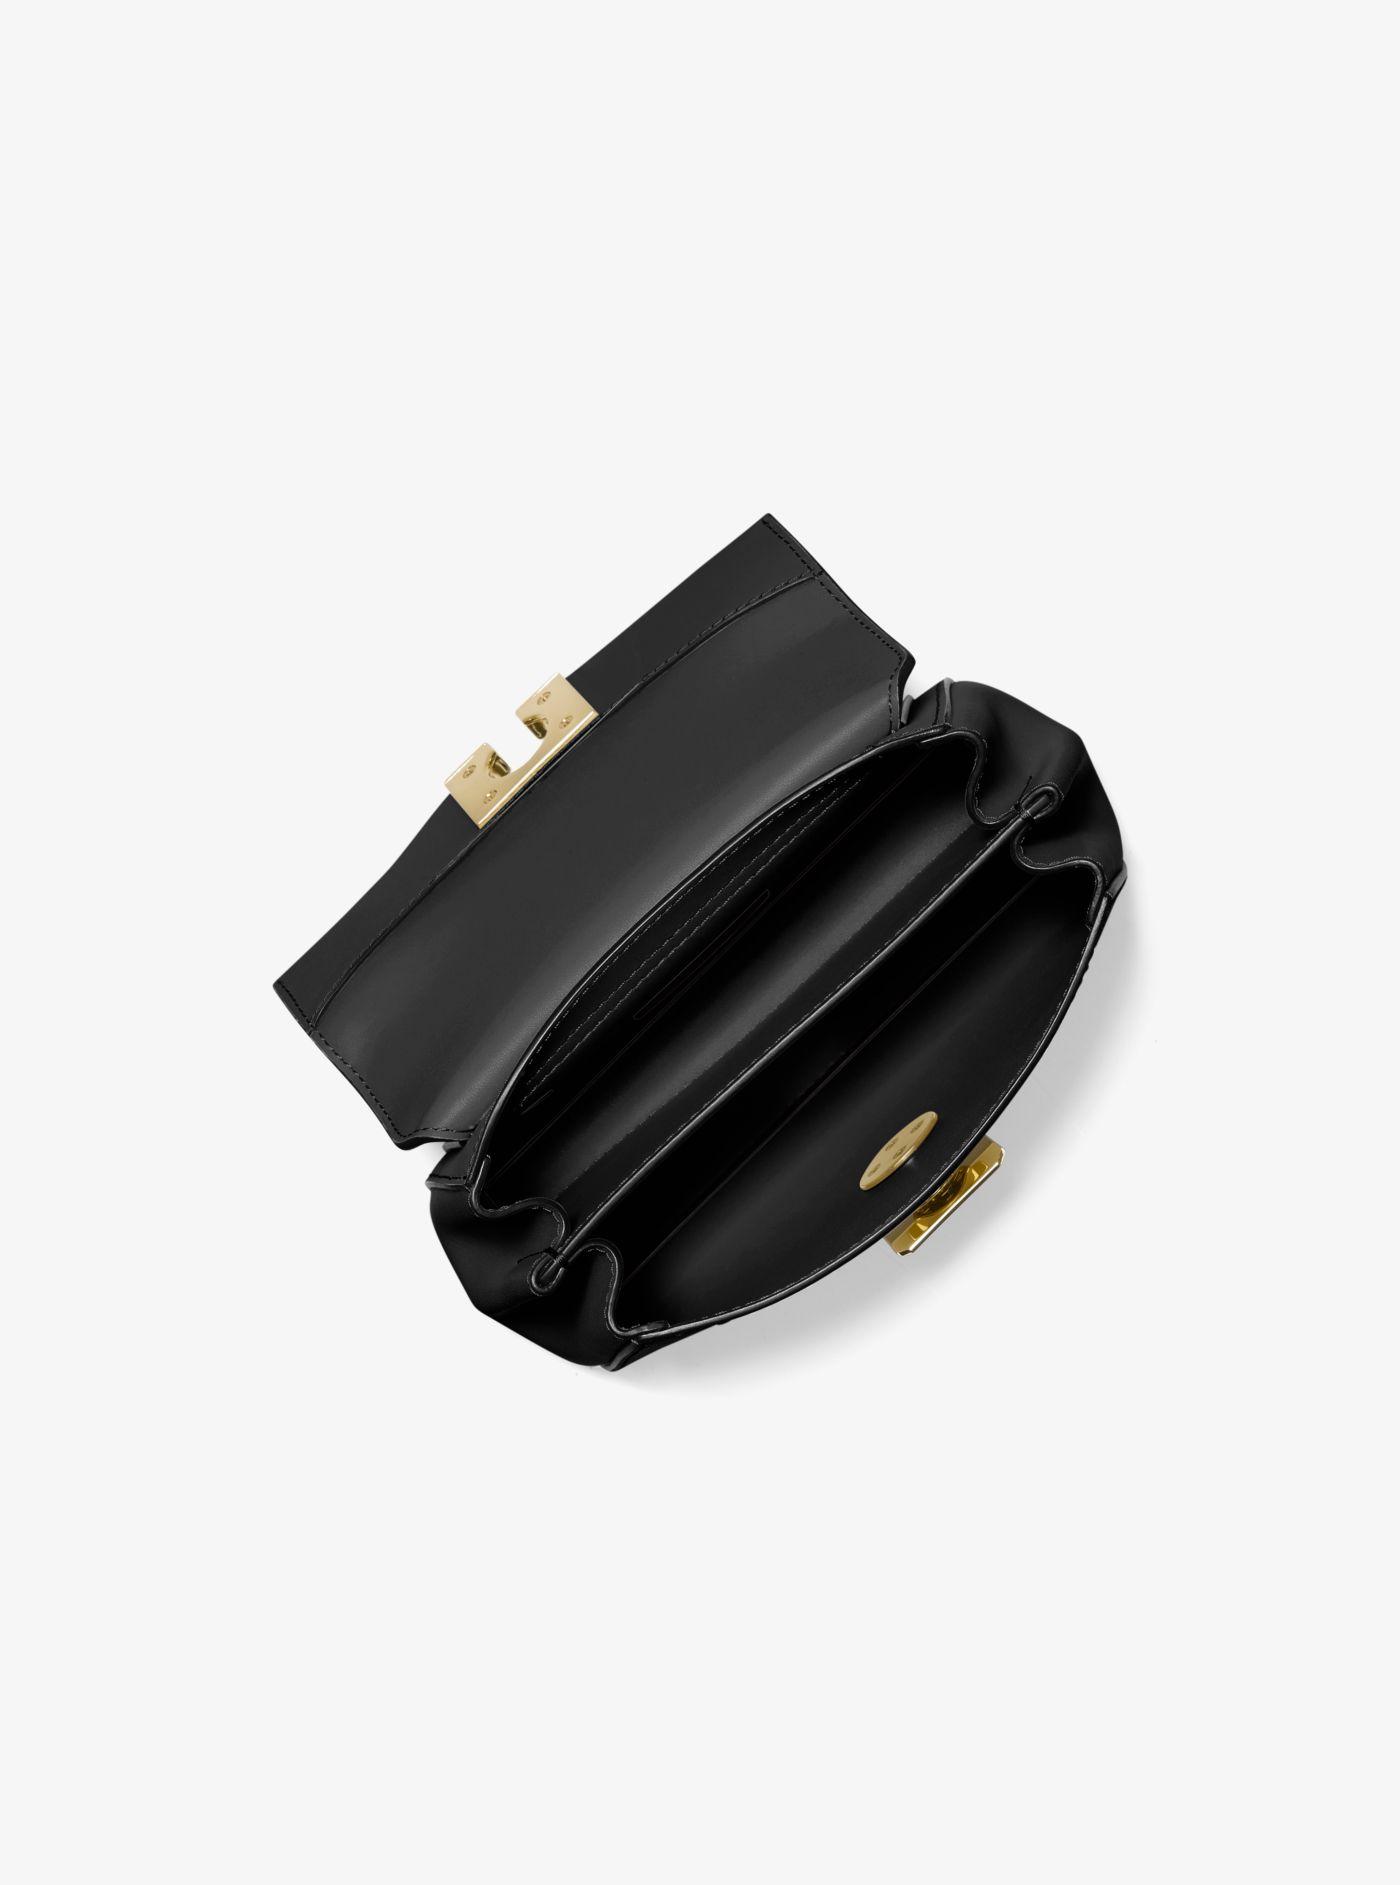 Michael Kors Lita Small Leather Crossbody Bag in Black | Lyst